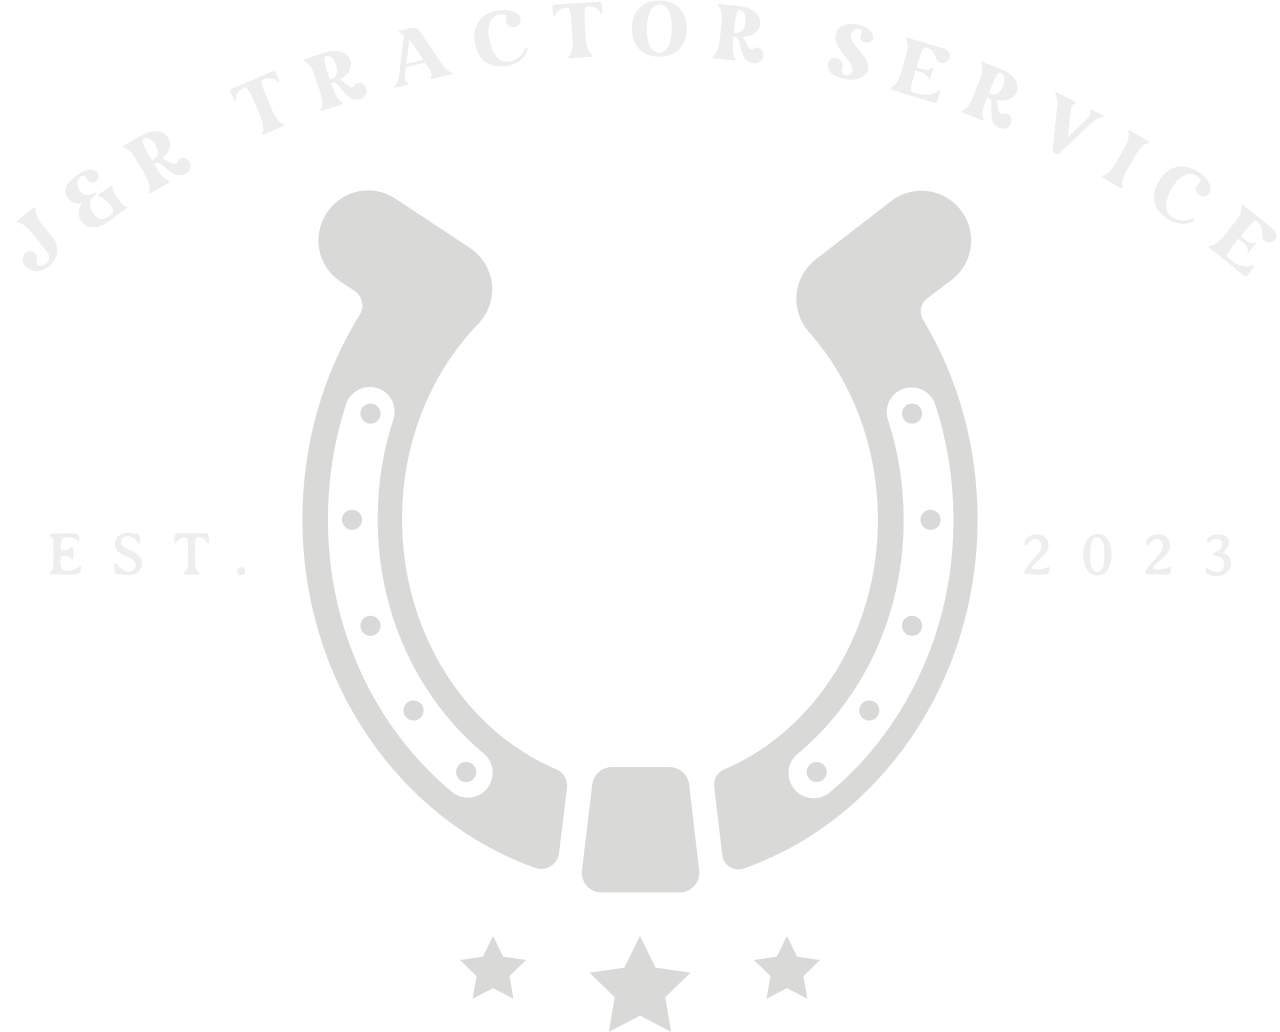 J&R TRACTOR SERVICE's logo